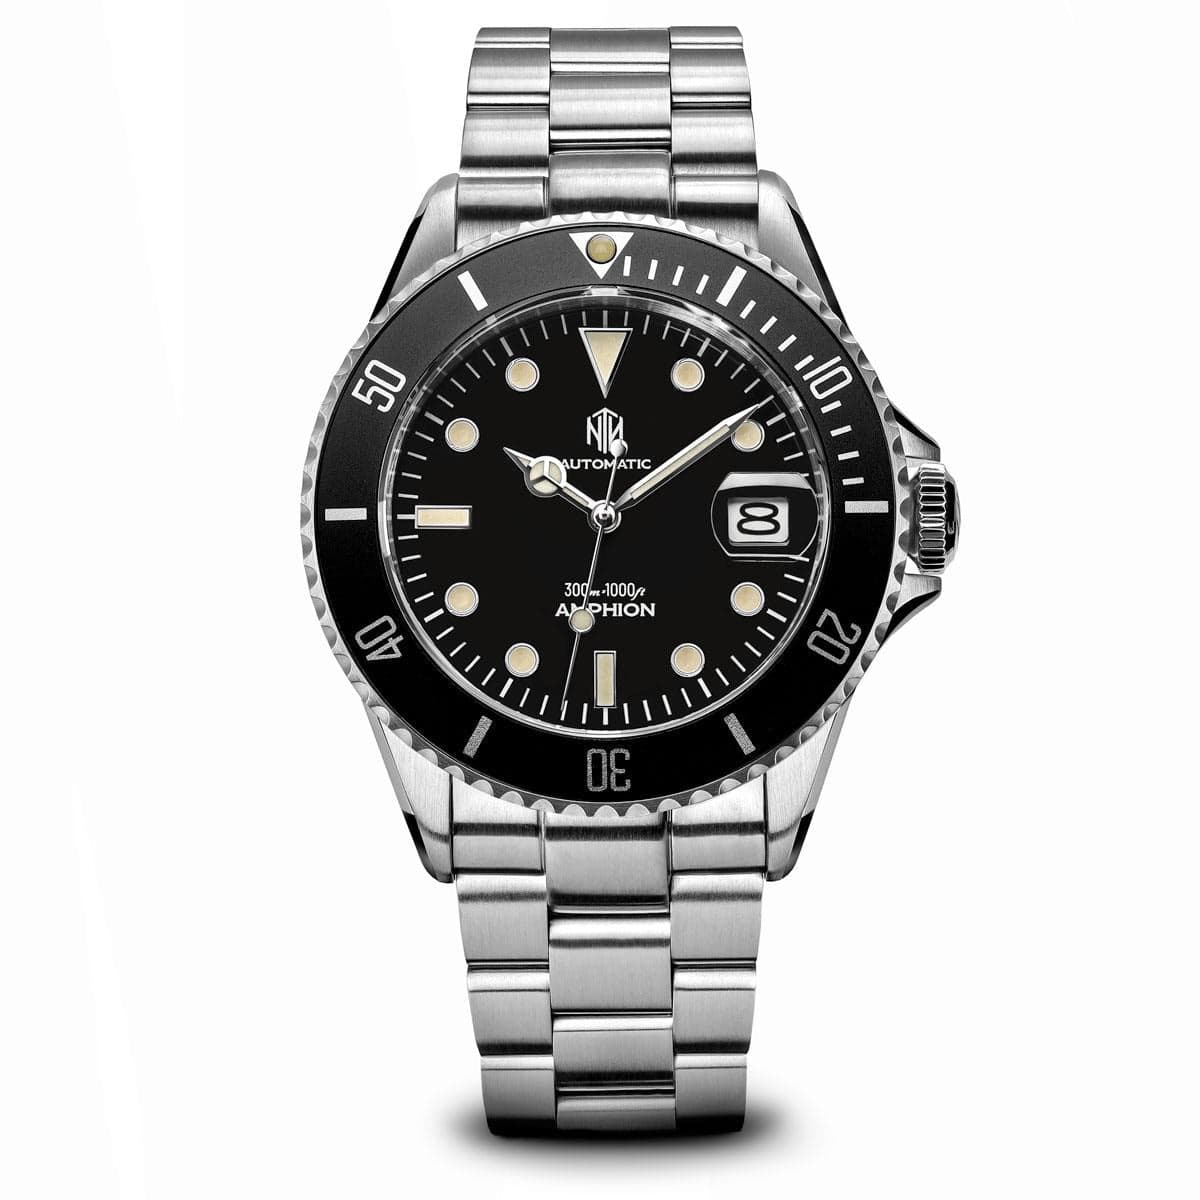 NTH Amphion Dive Watch - Onyx Black - WatchGecko Exclusive - NEARLY NEW